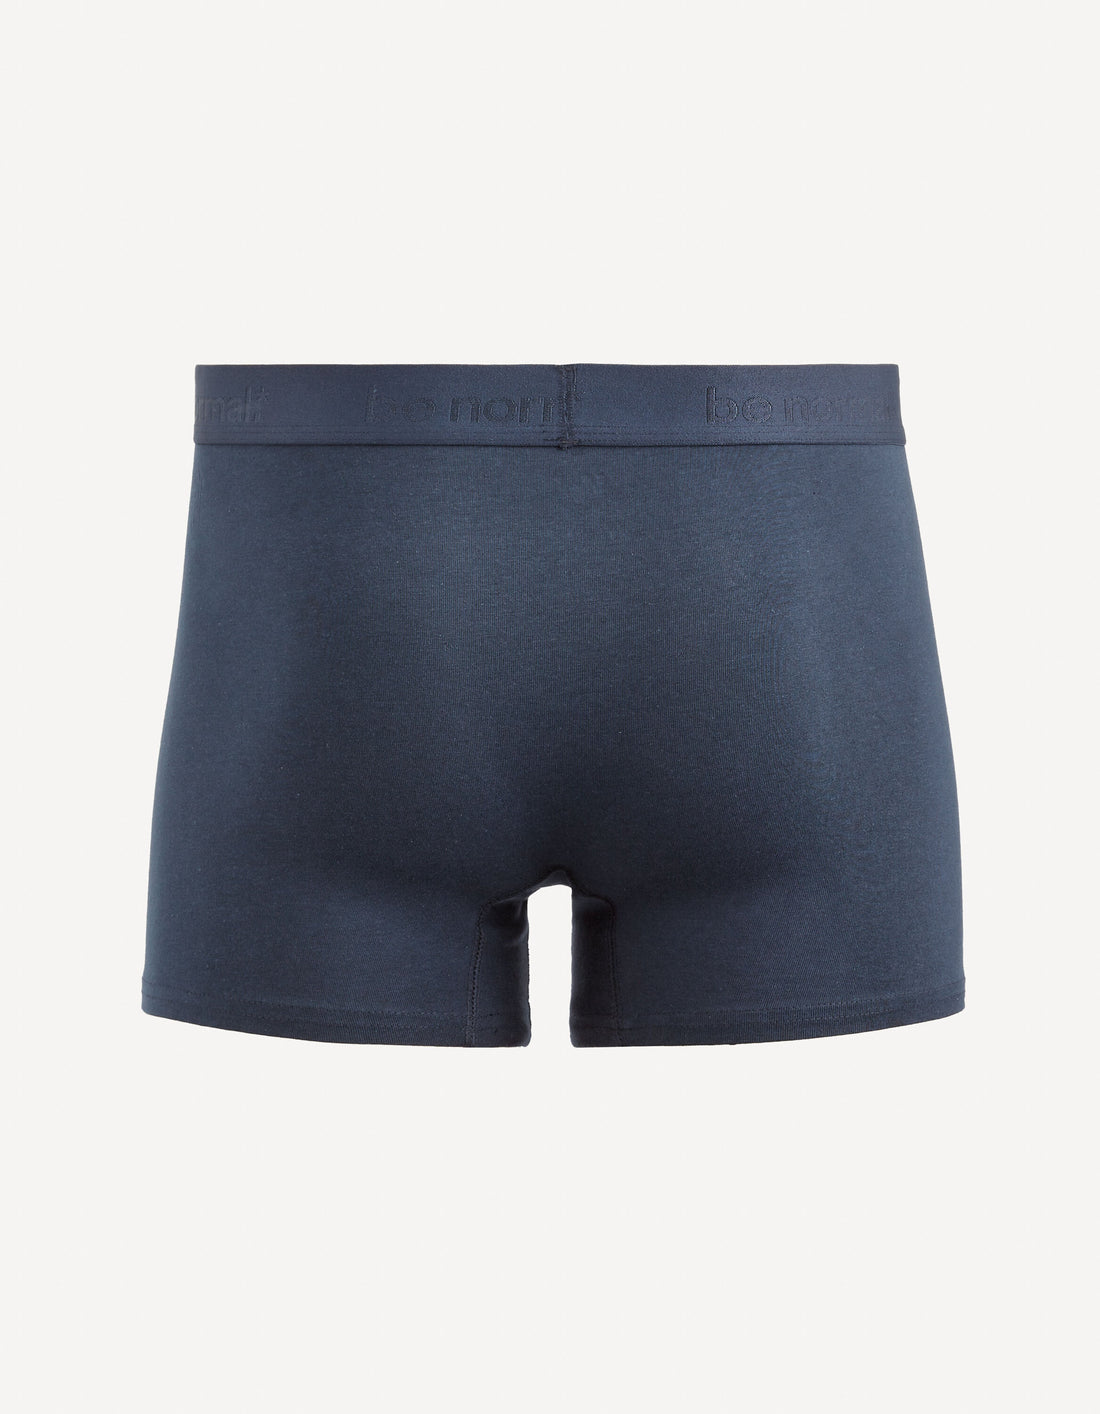 Stretch Cotton Boxer Shorts - Navy_BINORMAL_BLUE MEDIUM_02